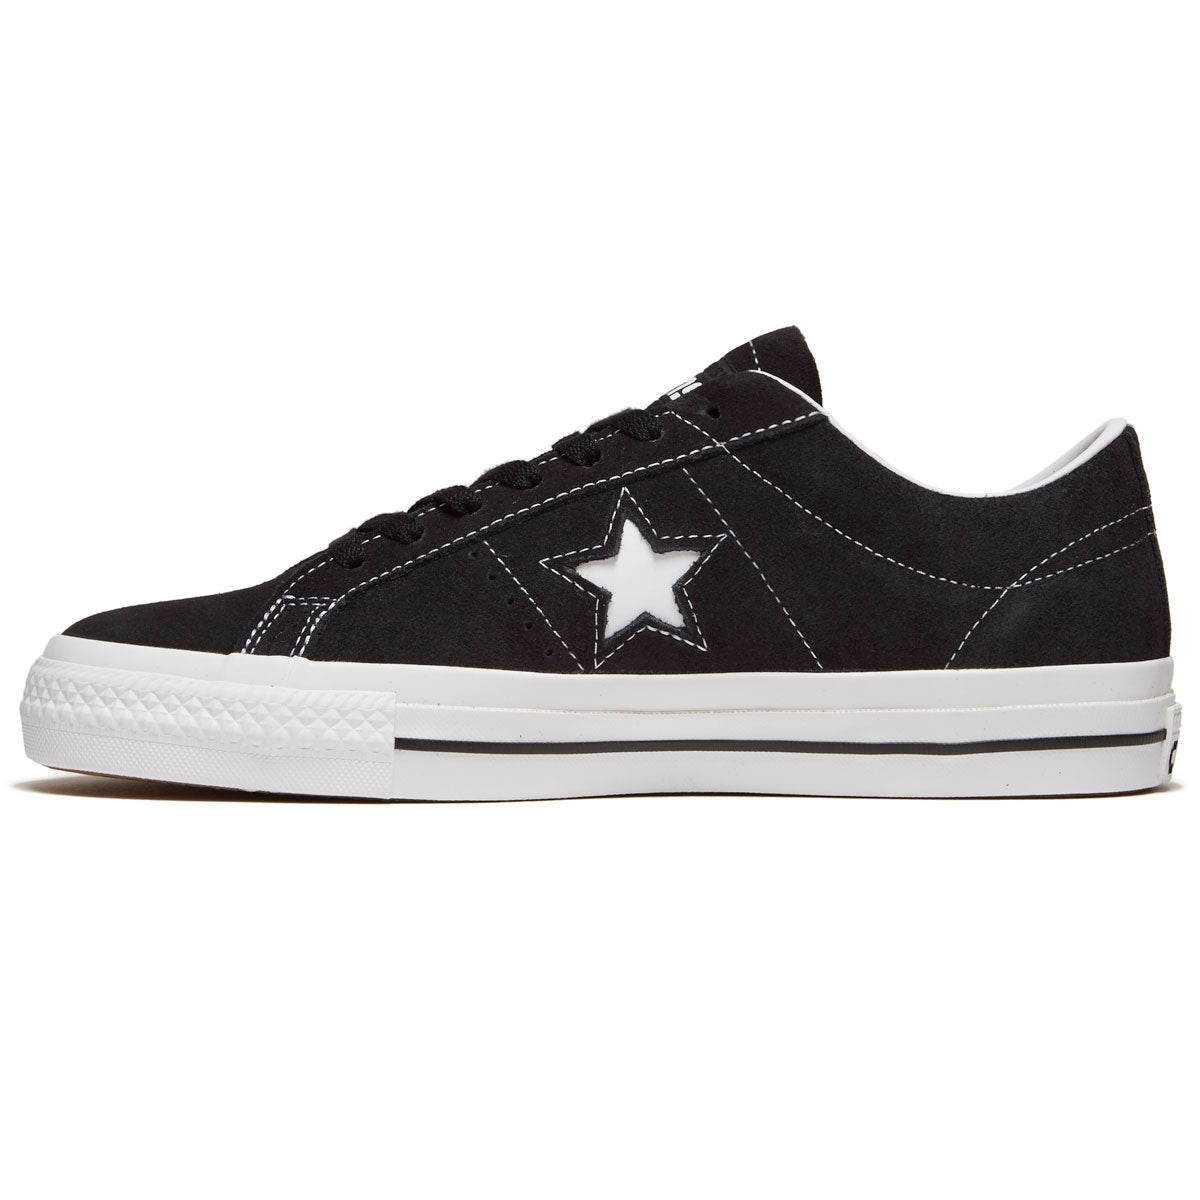 Converse One Star Pro Ox Shoes - Black/Black/White image 2